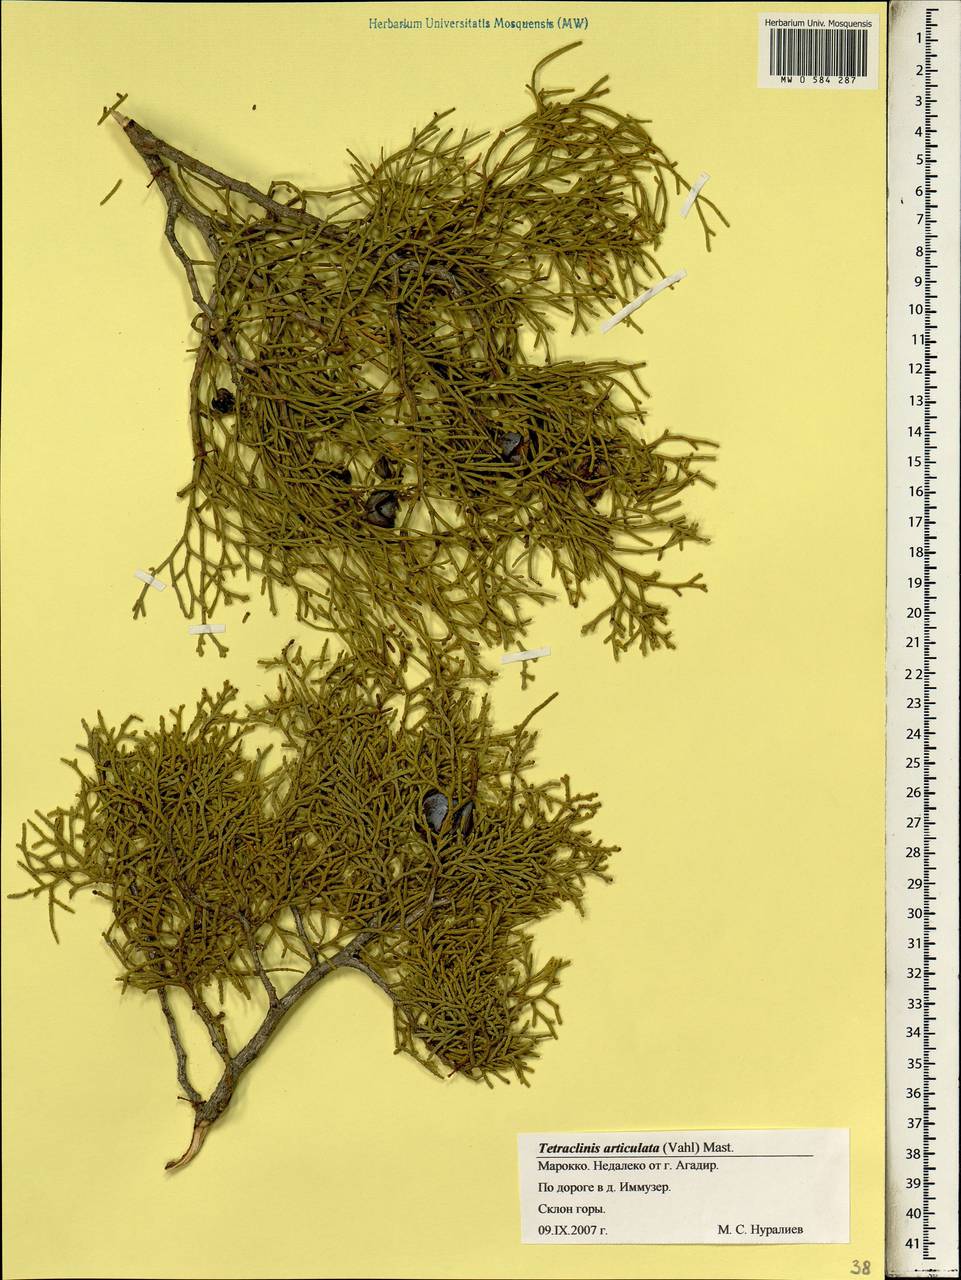 Tetraclinis articulata (Vahl) Mast., Африка (AFR) (Марокко)